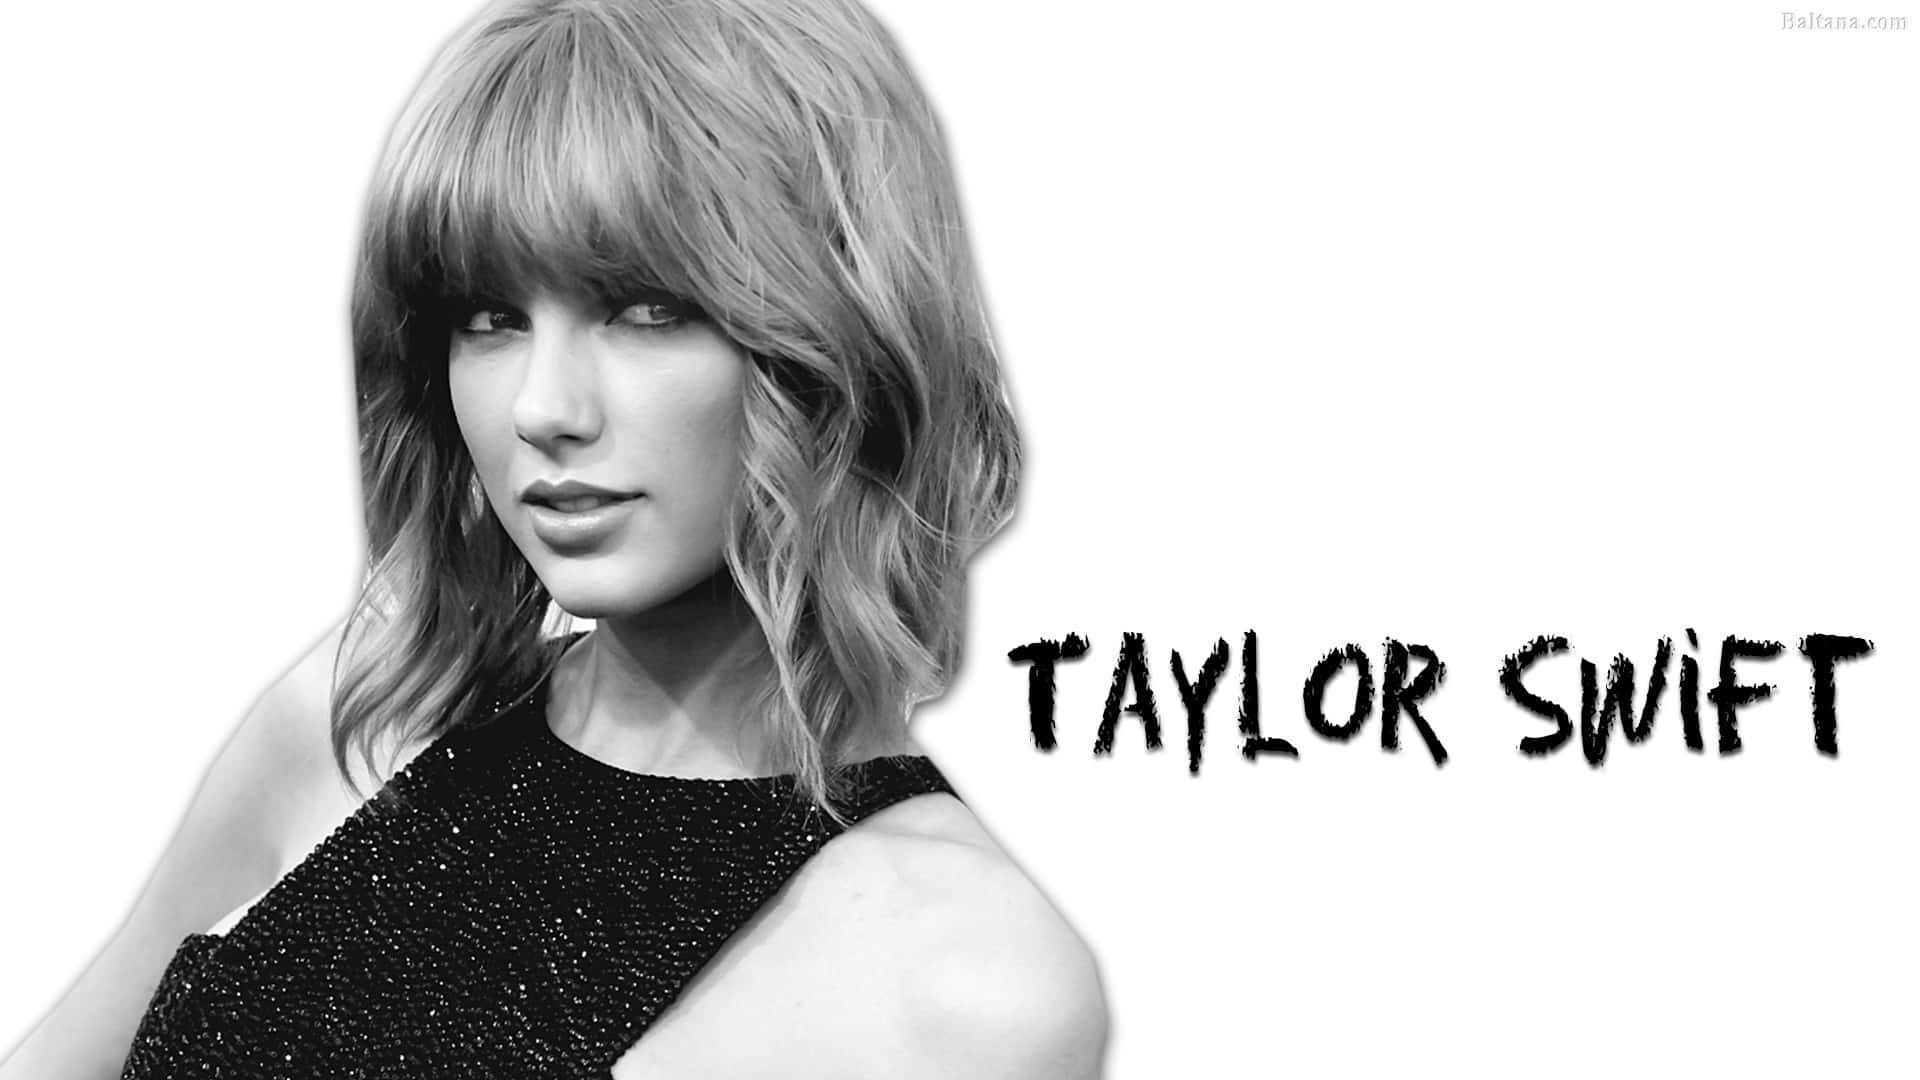 Taylor Swift Blackand White Portrait Wallpaper